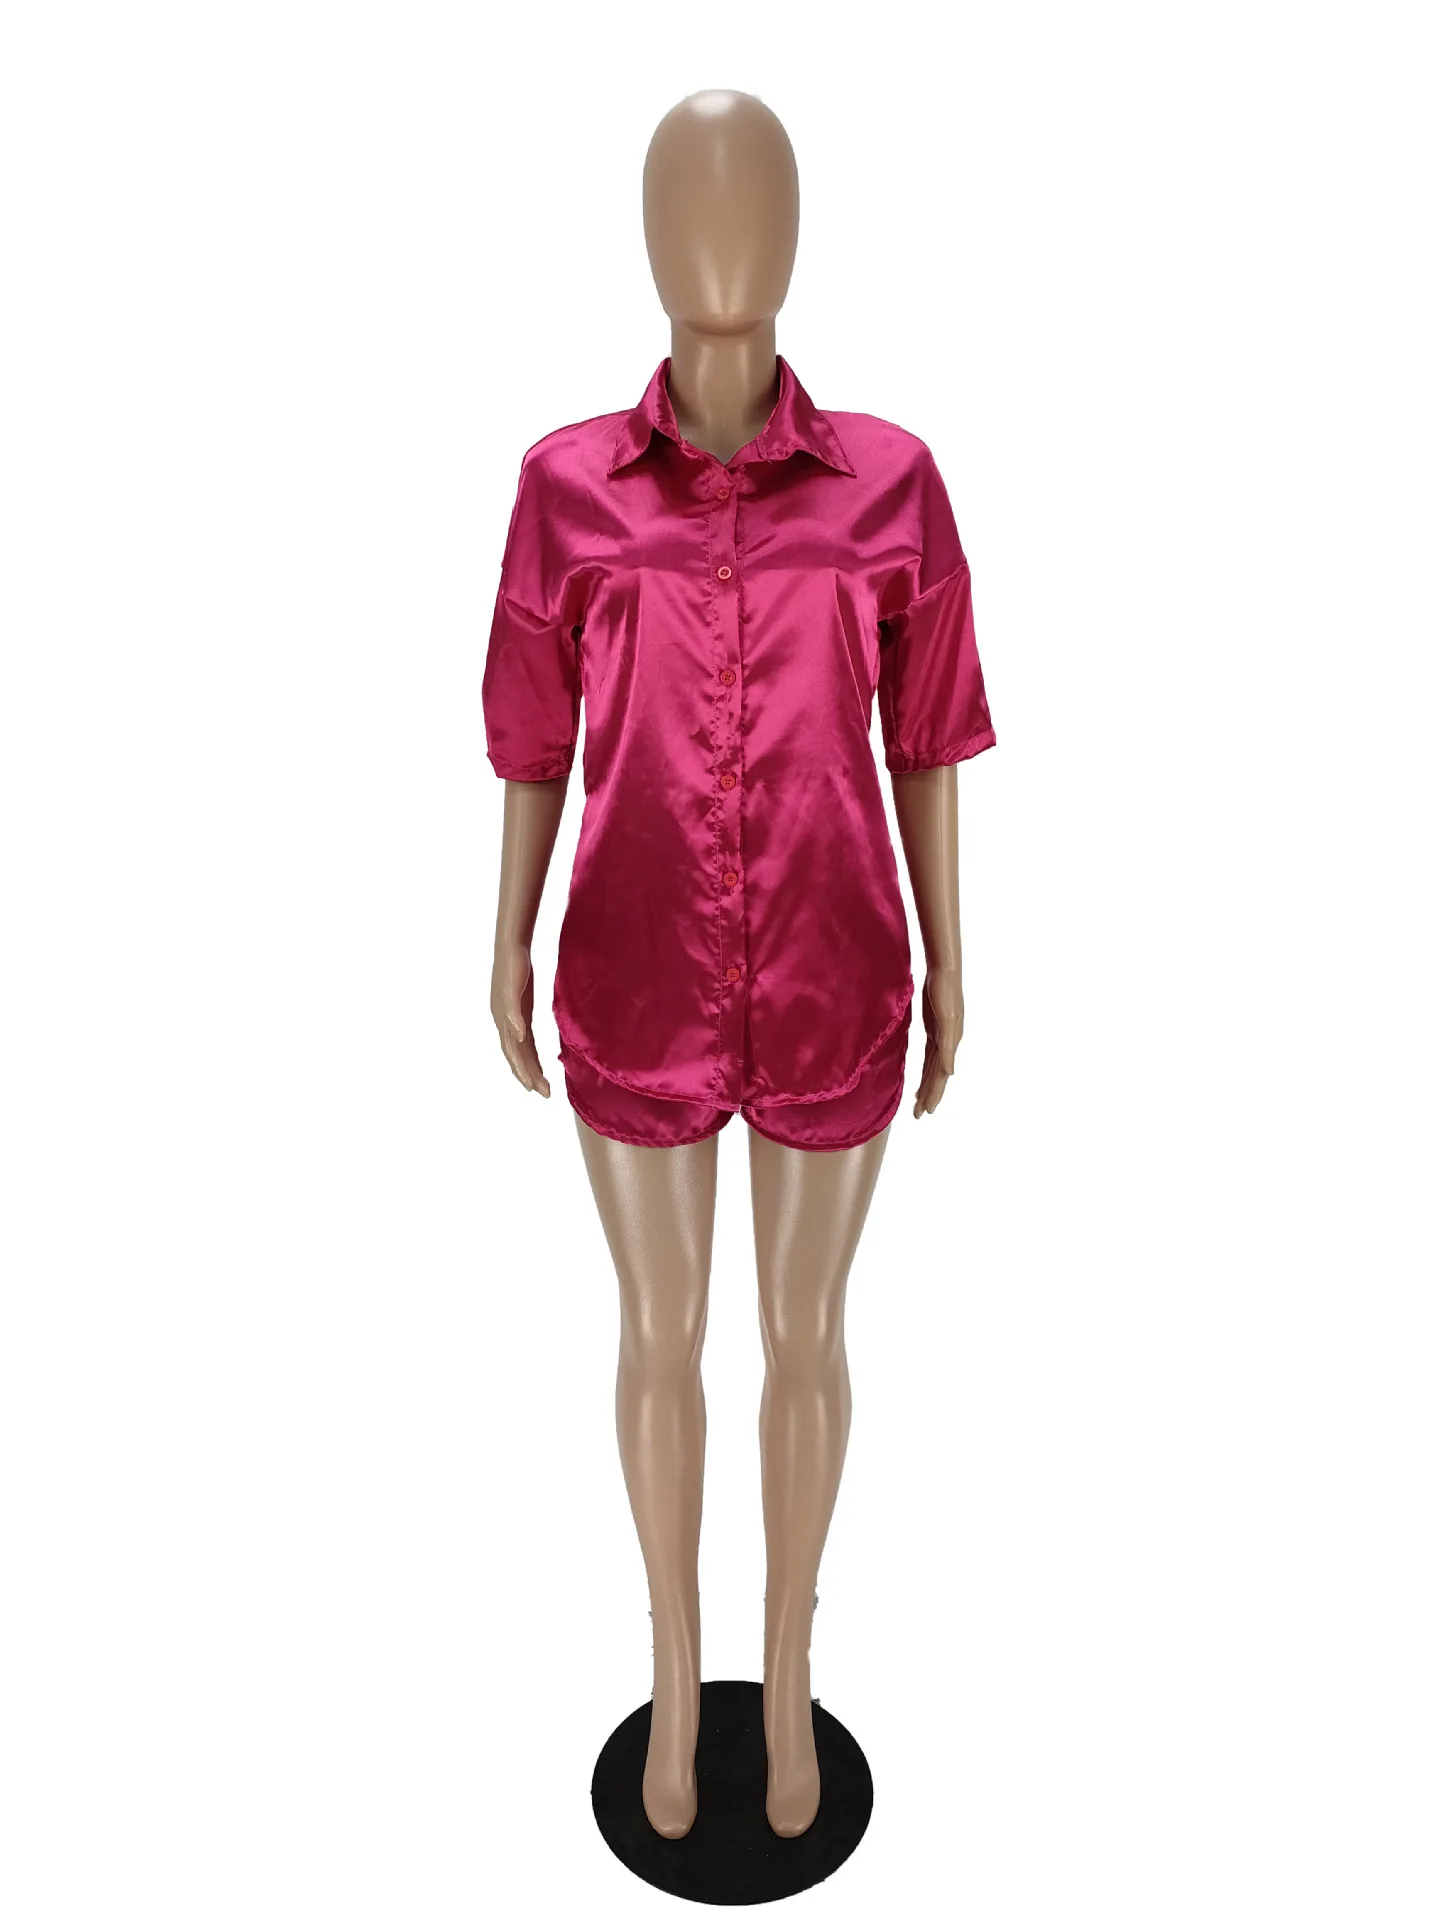 Satin Women 2 Piece Set Button Up Short Sleeve Button Up Shirts Shorts Matching Set 2022 Summer Office Lady Workout Tracksuits 6